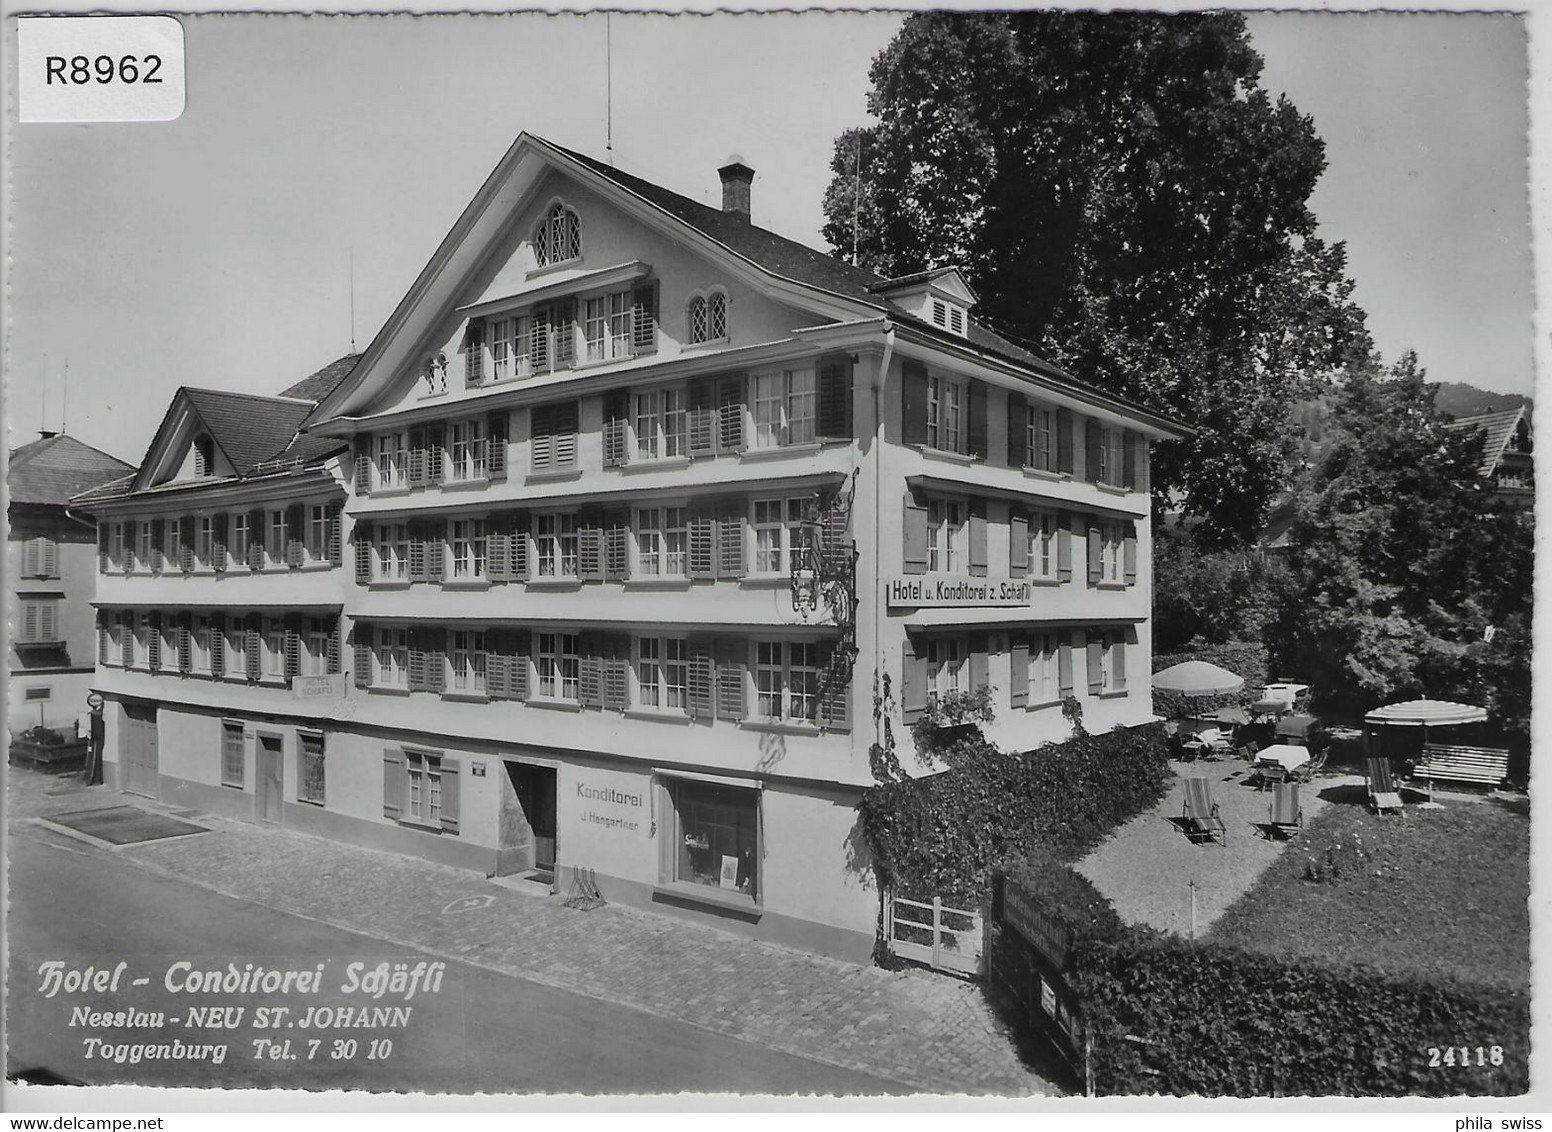 Hotel-Conditorei Schäfli - Nesslau - Neu St. Johann - Nesslau